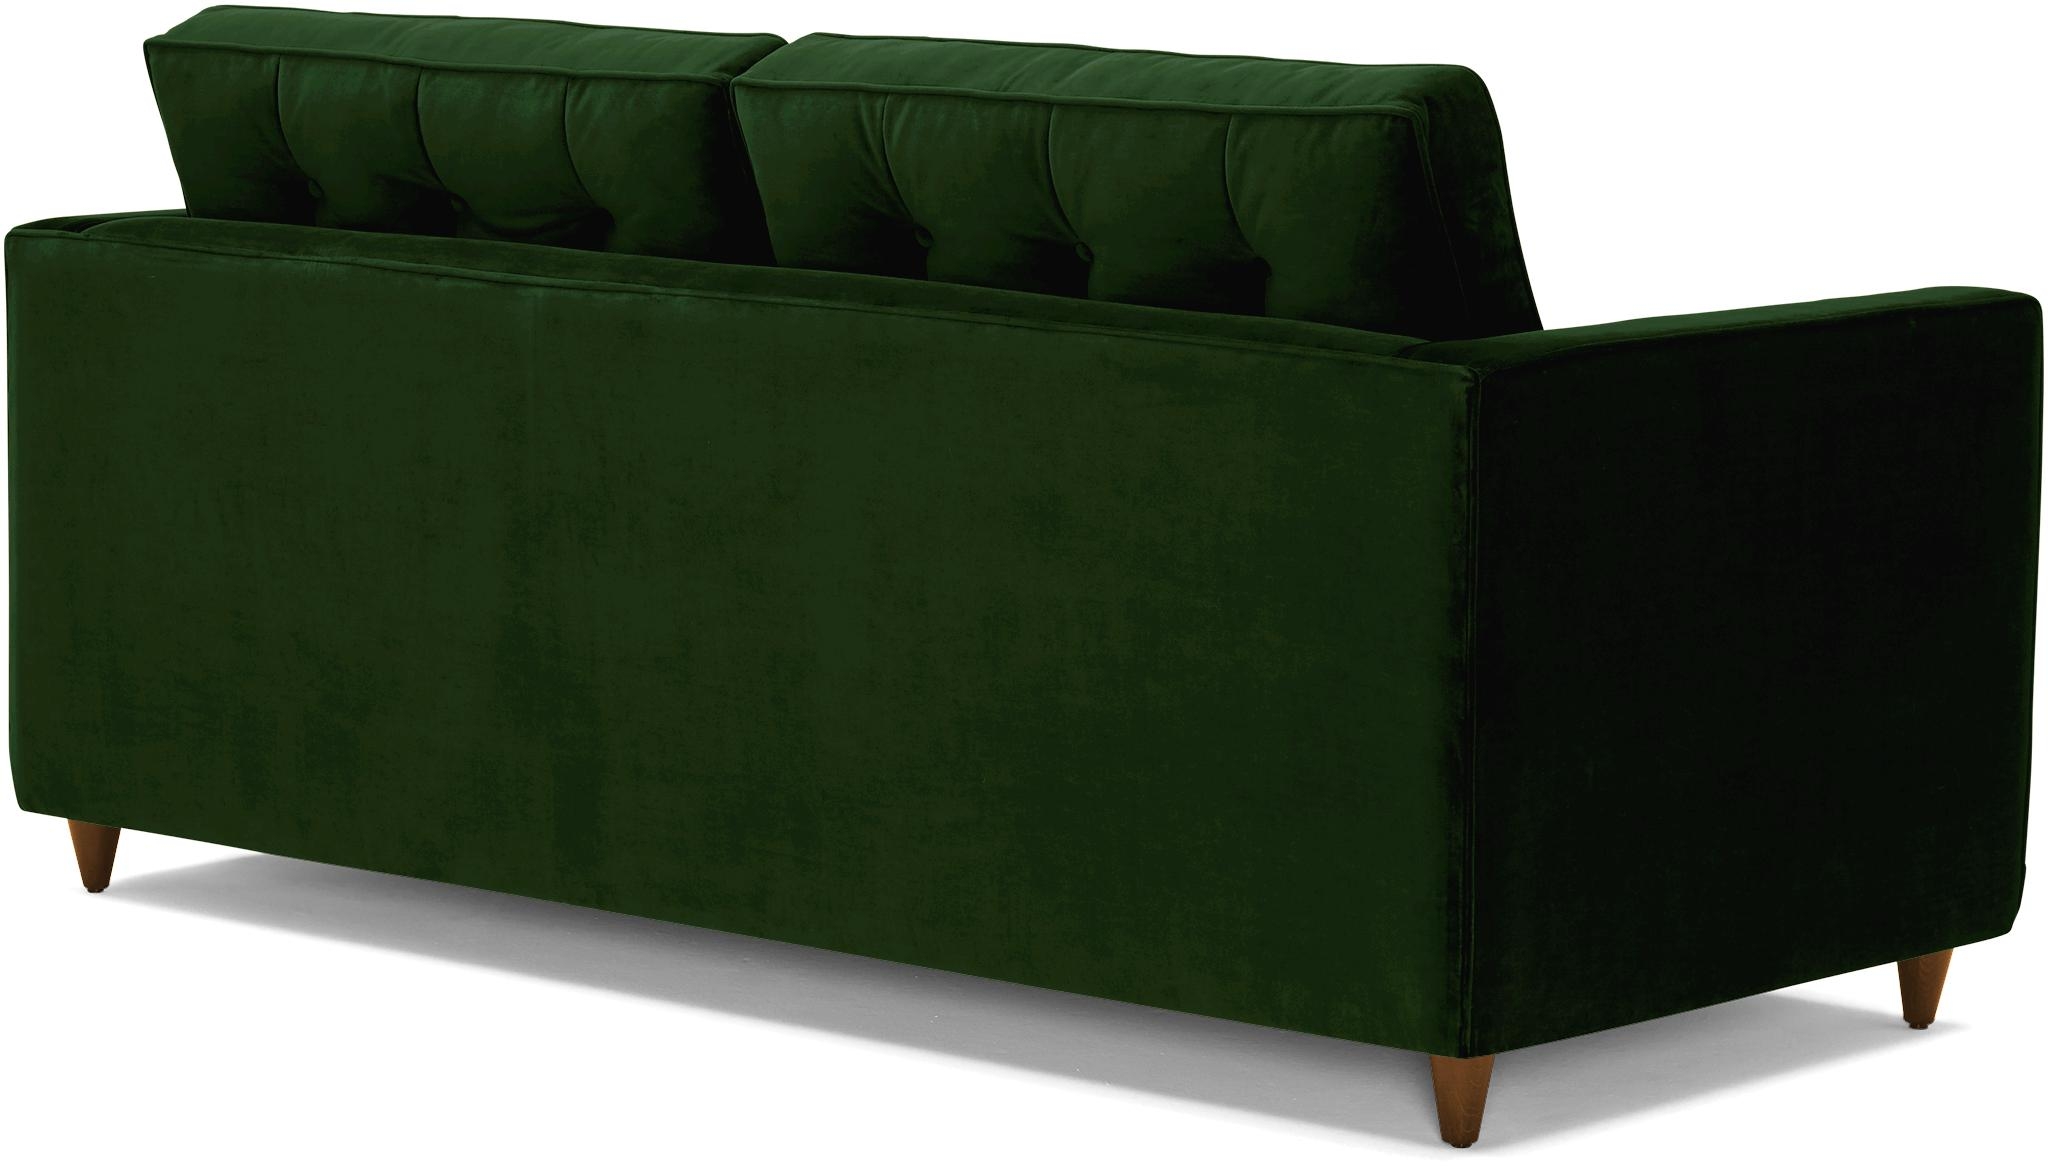 Green Braxton Mid Century Modern Sleeper Sofa - Royale Evergreen - Mocha - Image 3